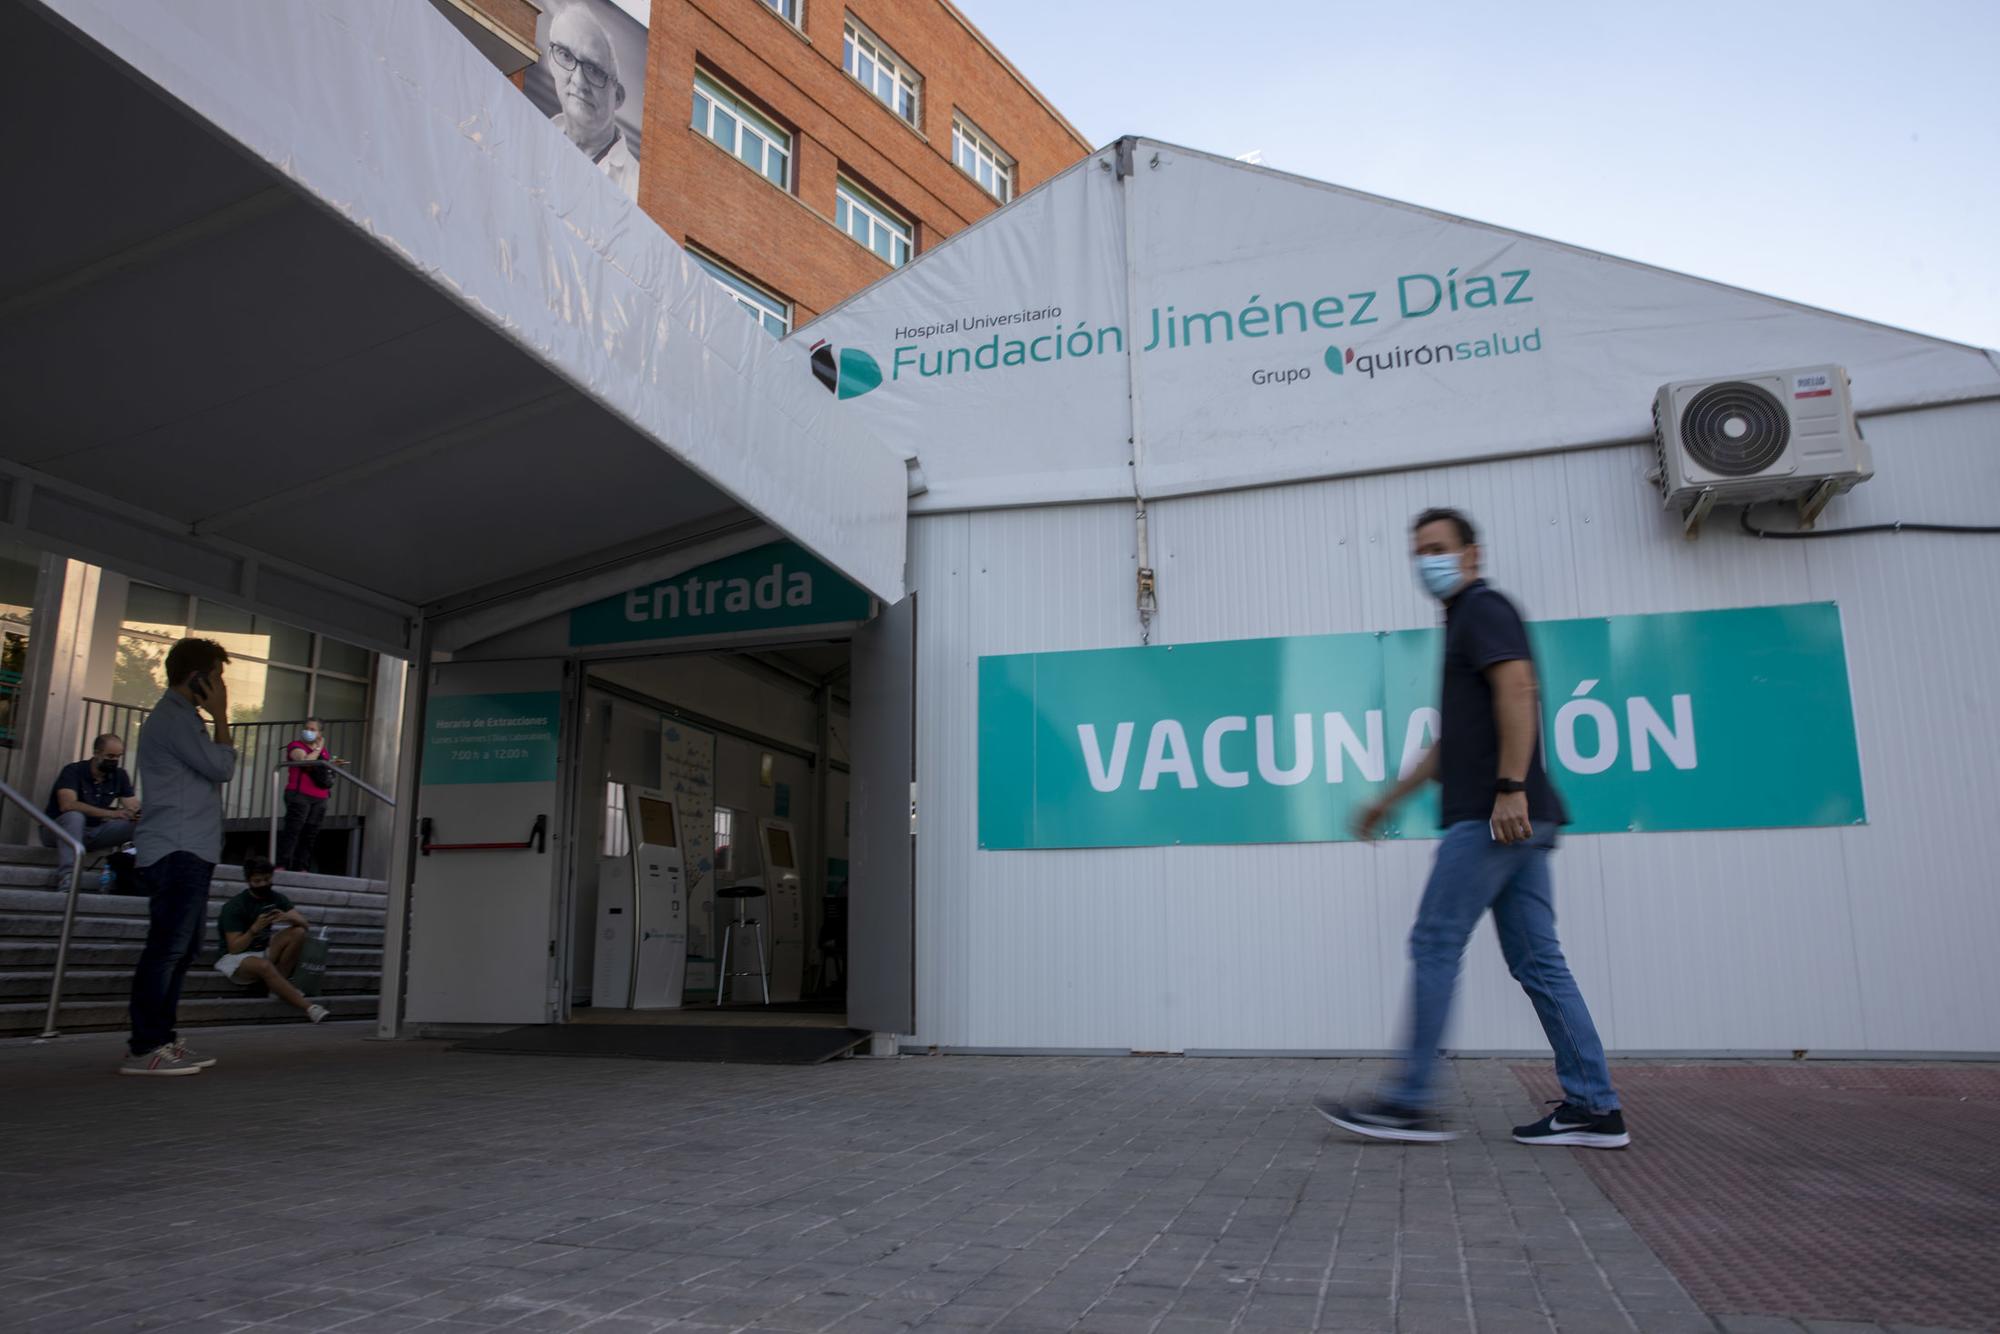 Vacunacion Fundacion Jimenez Diaz 2